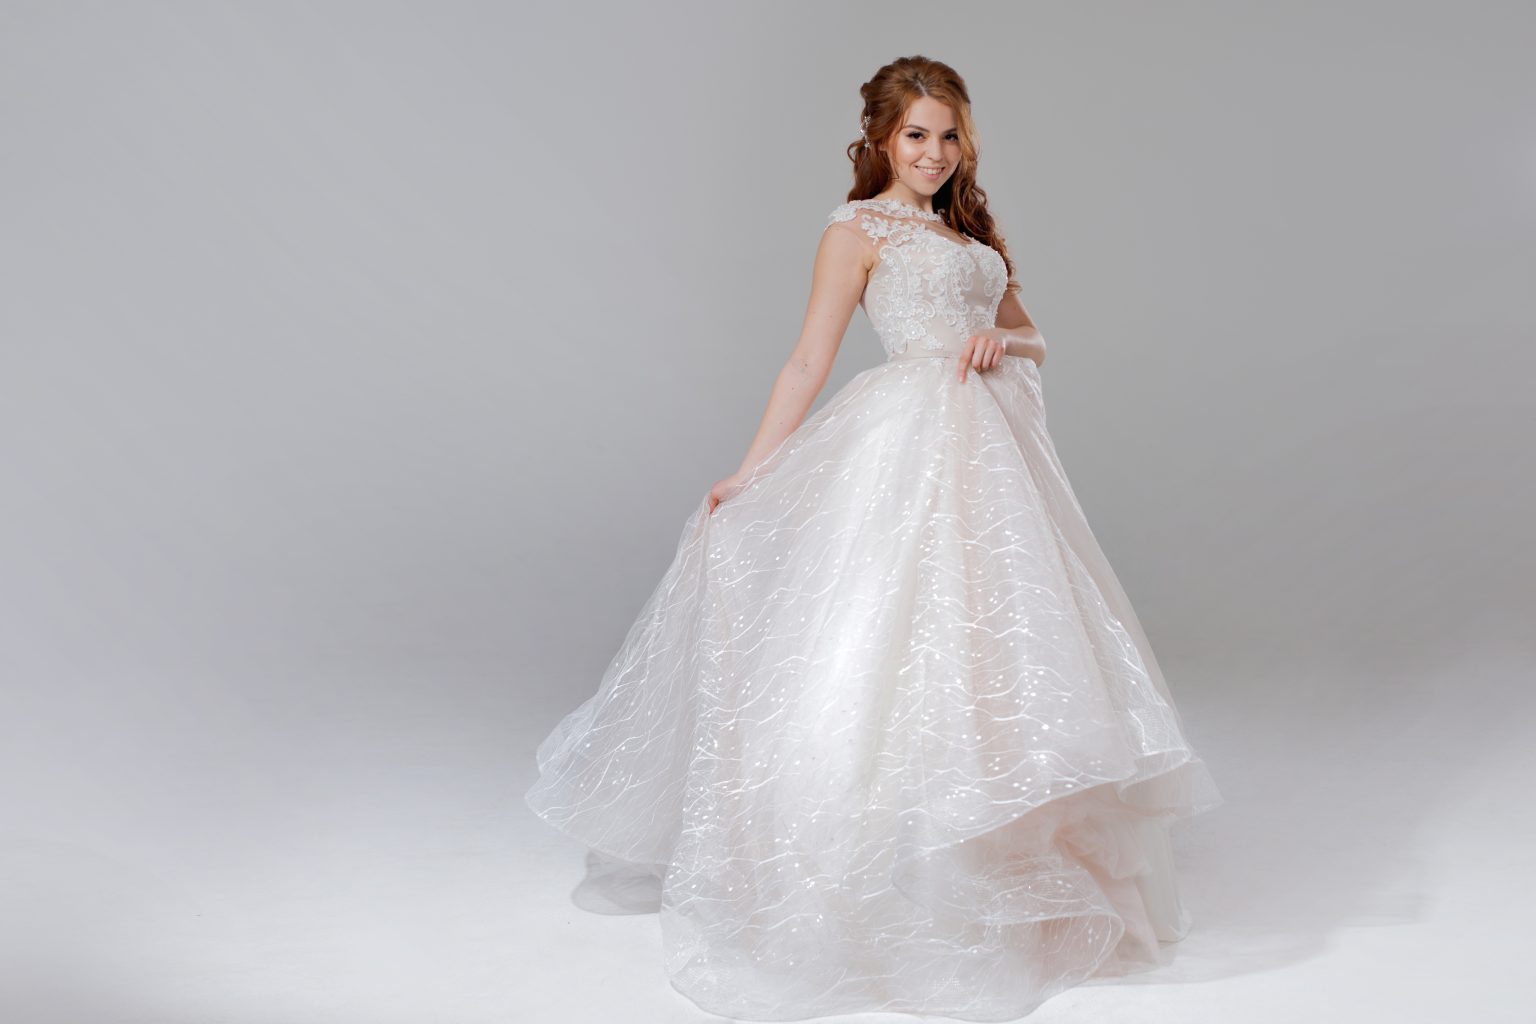 Plus Size Wedding Dress In Katy Tx Fiancée Bridal Curves 1483